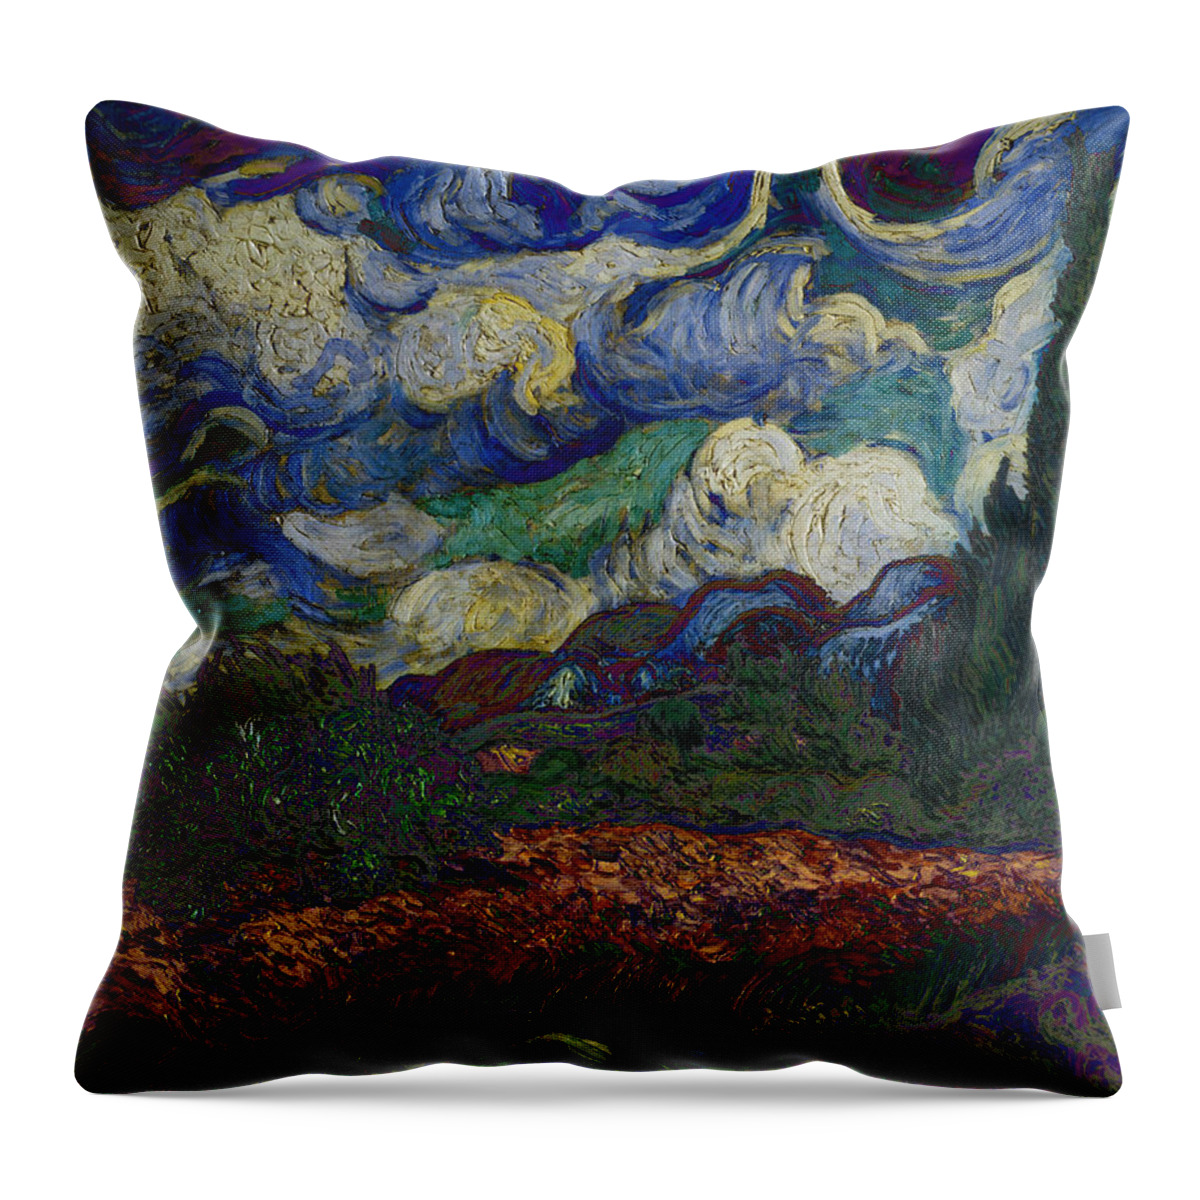 Post Modern Throw Pillow featuring the digital art Blend 19 van Gogh by David Bridburg